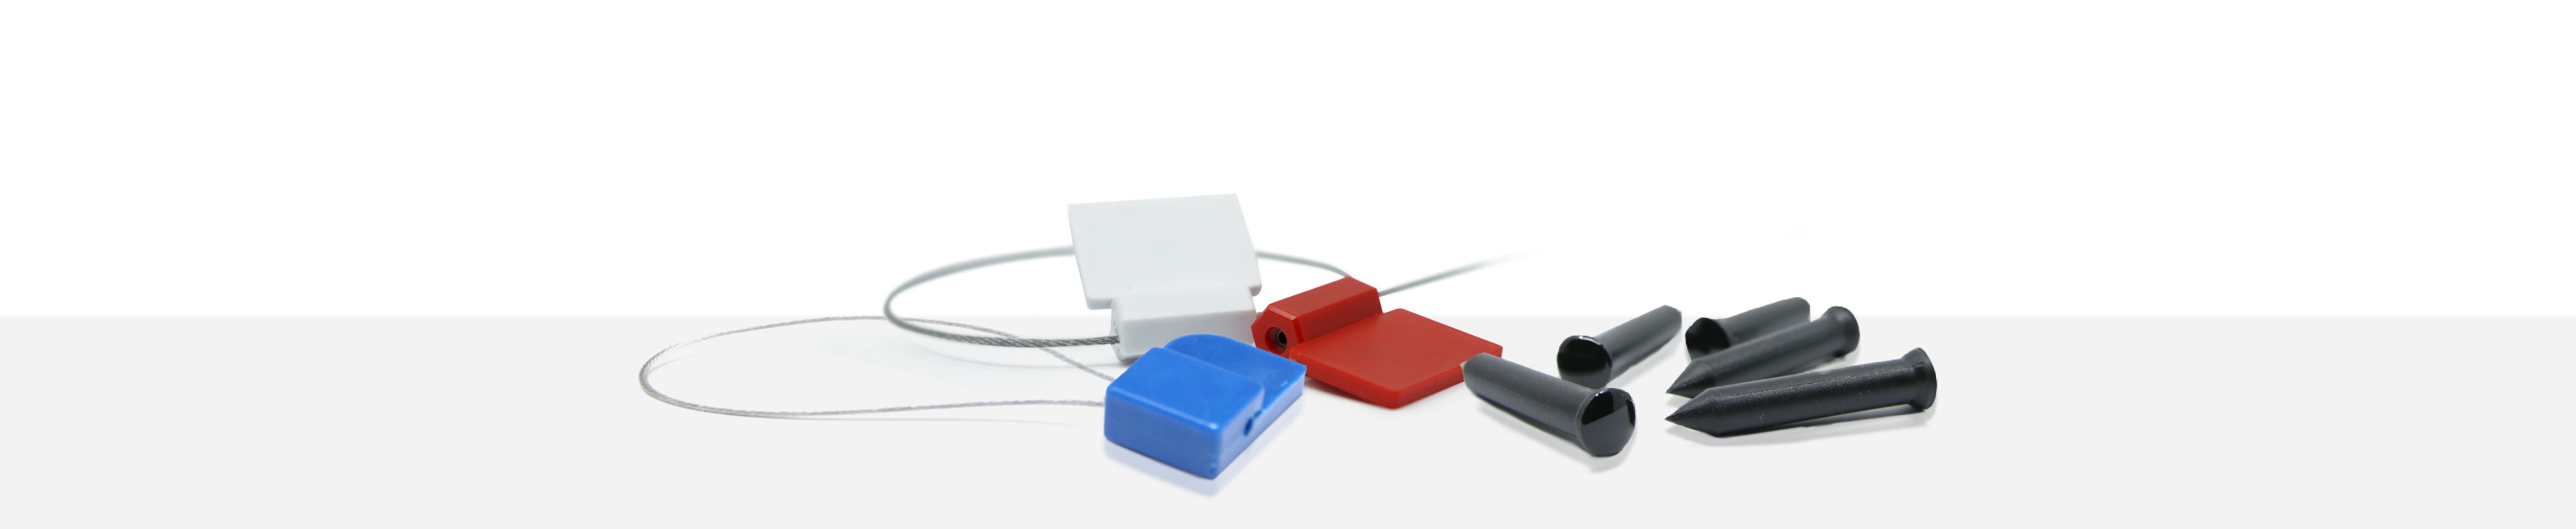 Industrie Kabelbinder in verschiedenen Farben neben schwarze NFC Nägeln